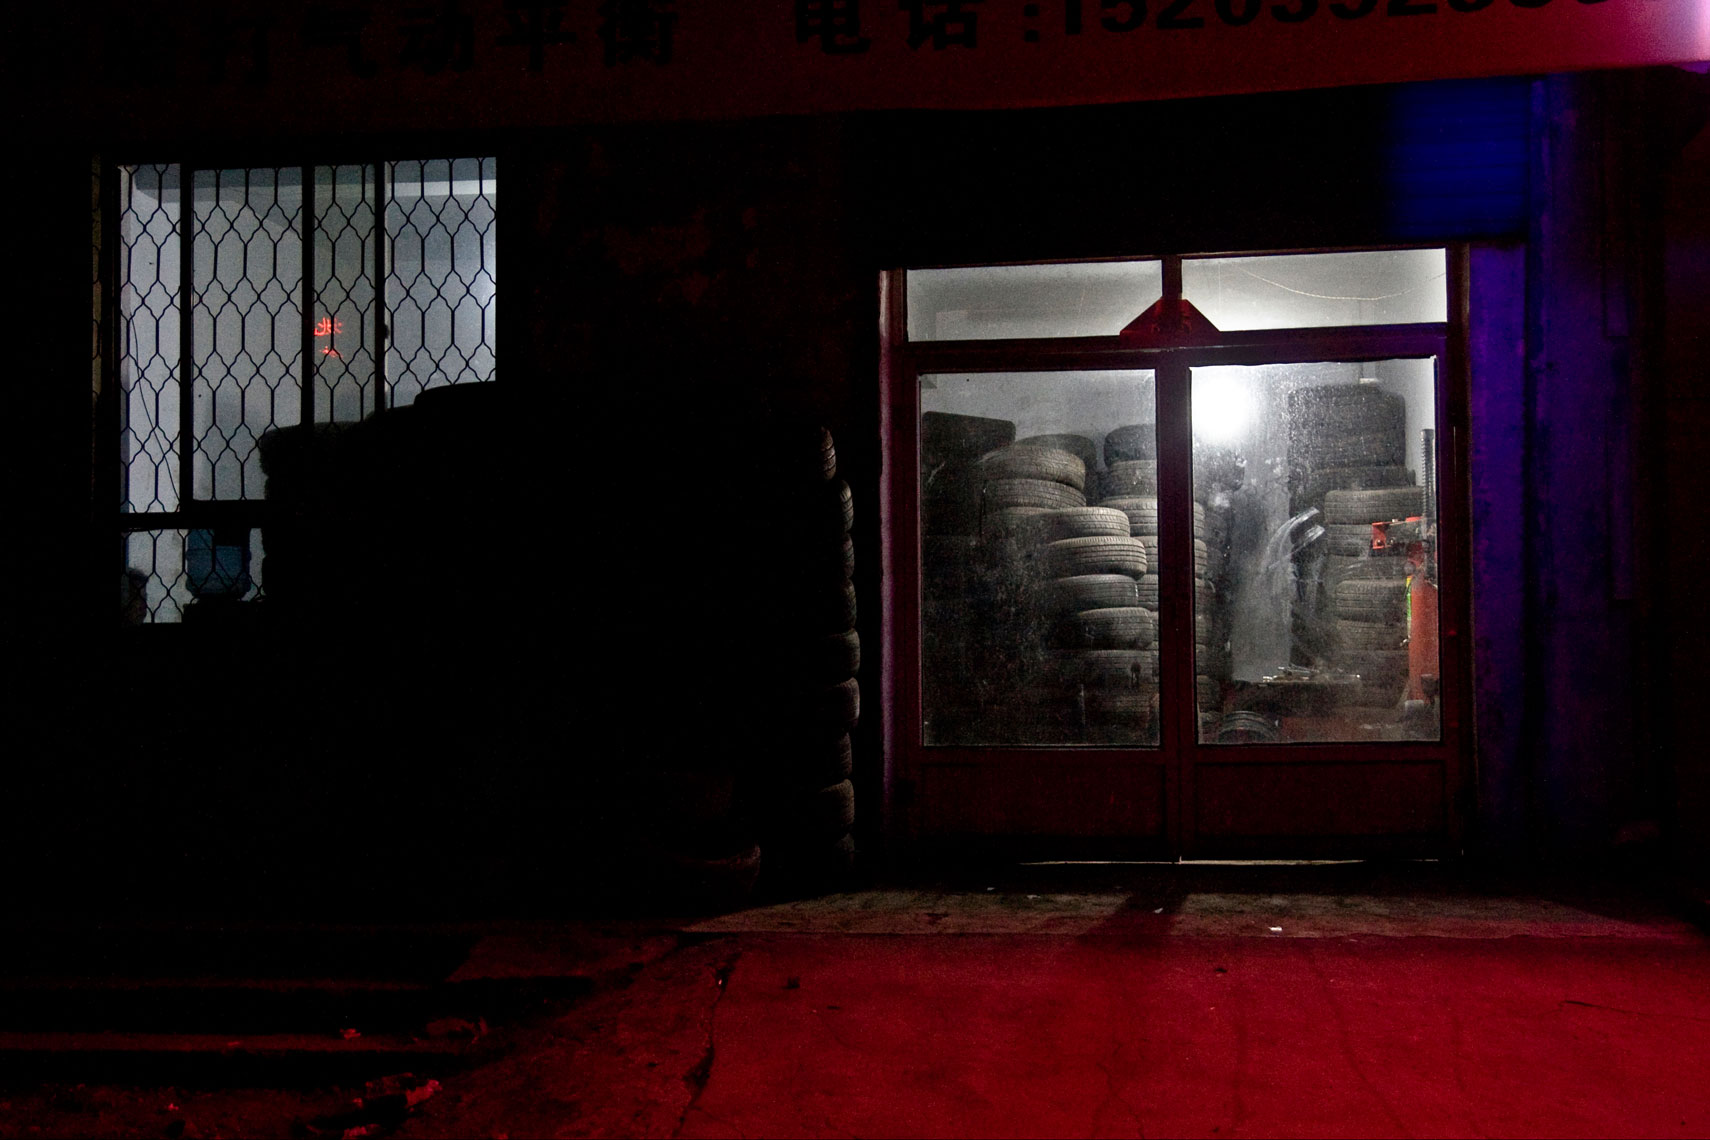 CHINA. Datong, Shanxi Province, September 2012. A tire shop.